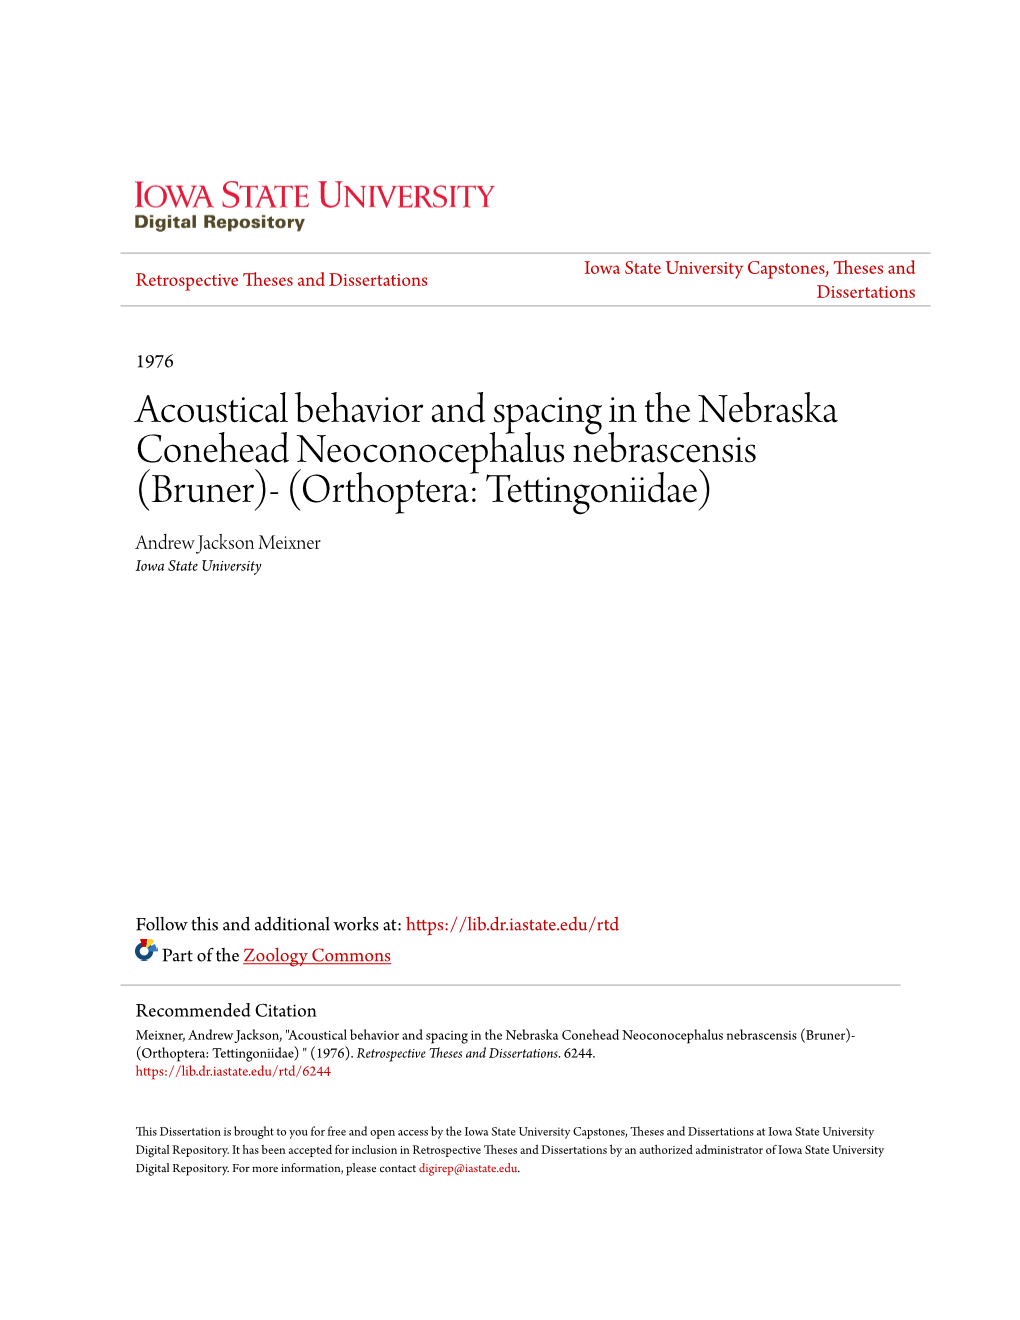 Acoustical Behavior and Spacing in the Nebraska Conehead